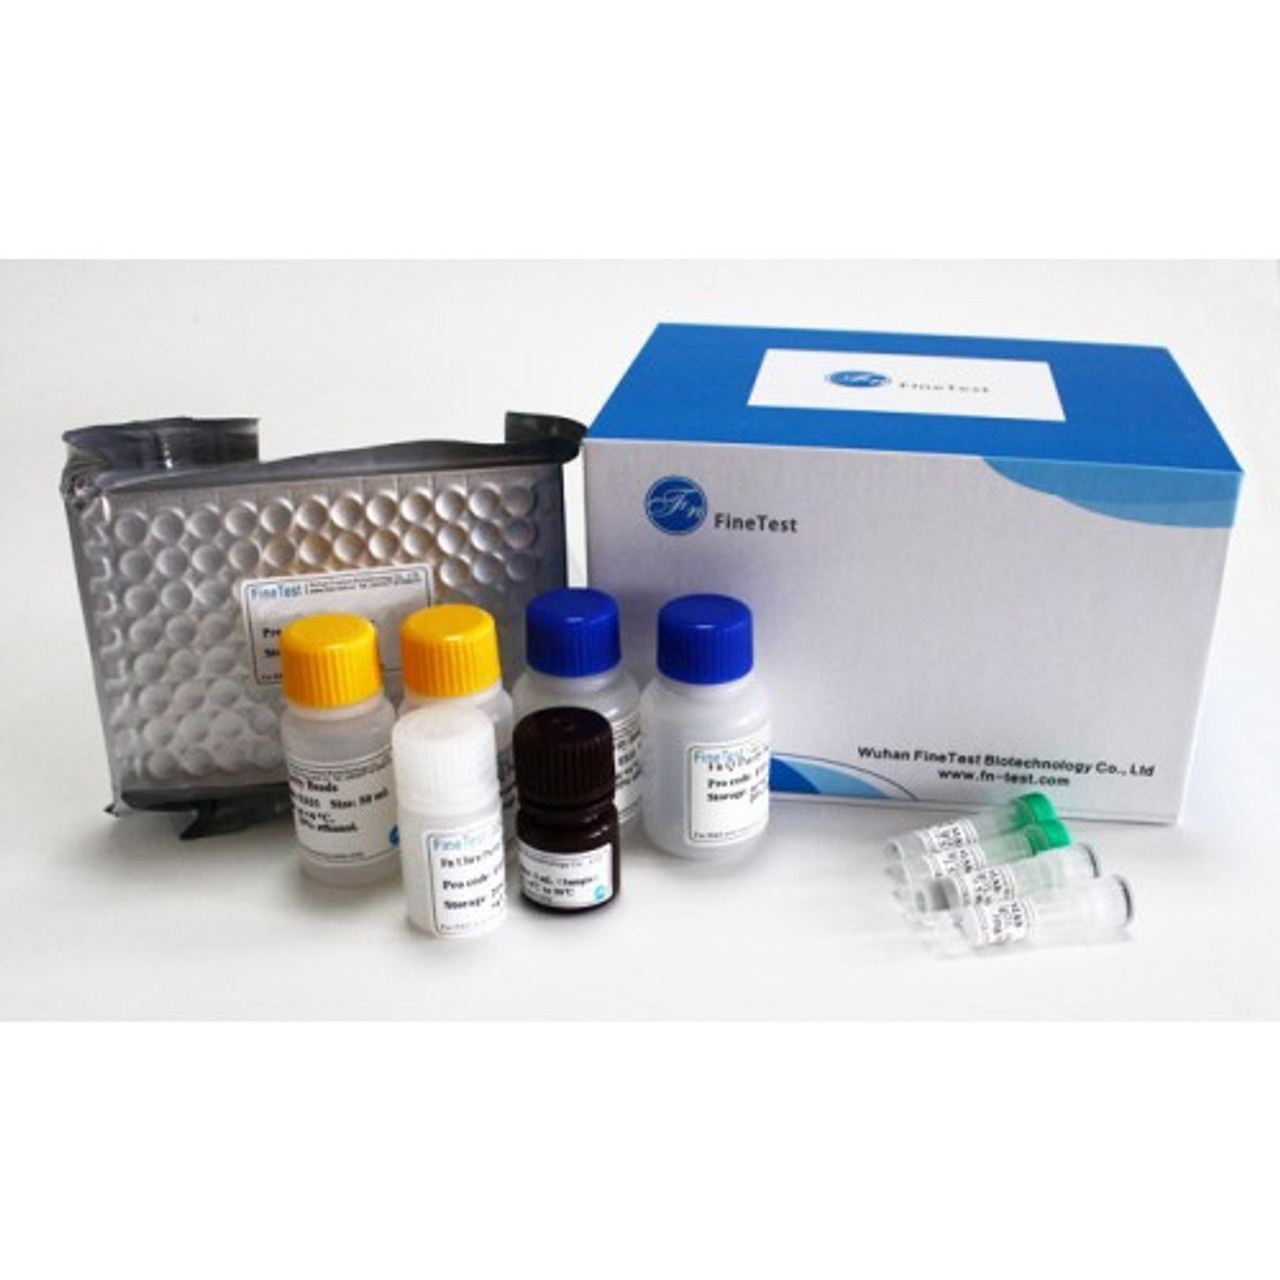 Sheep IgM(Immunoglobulin M) ELISA Kit